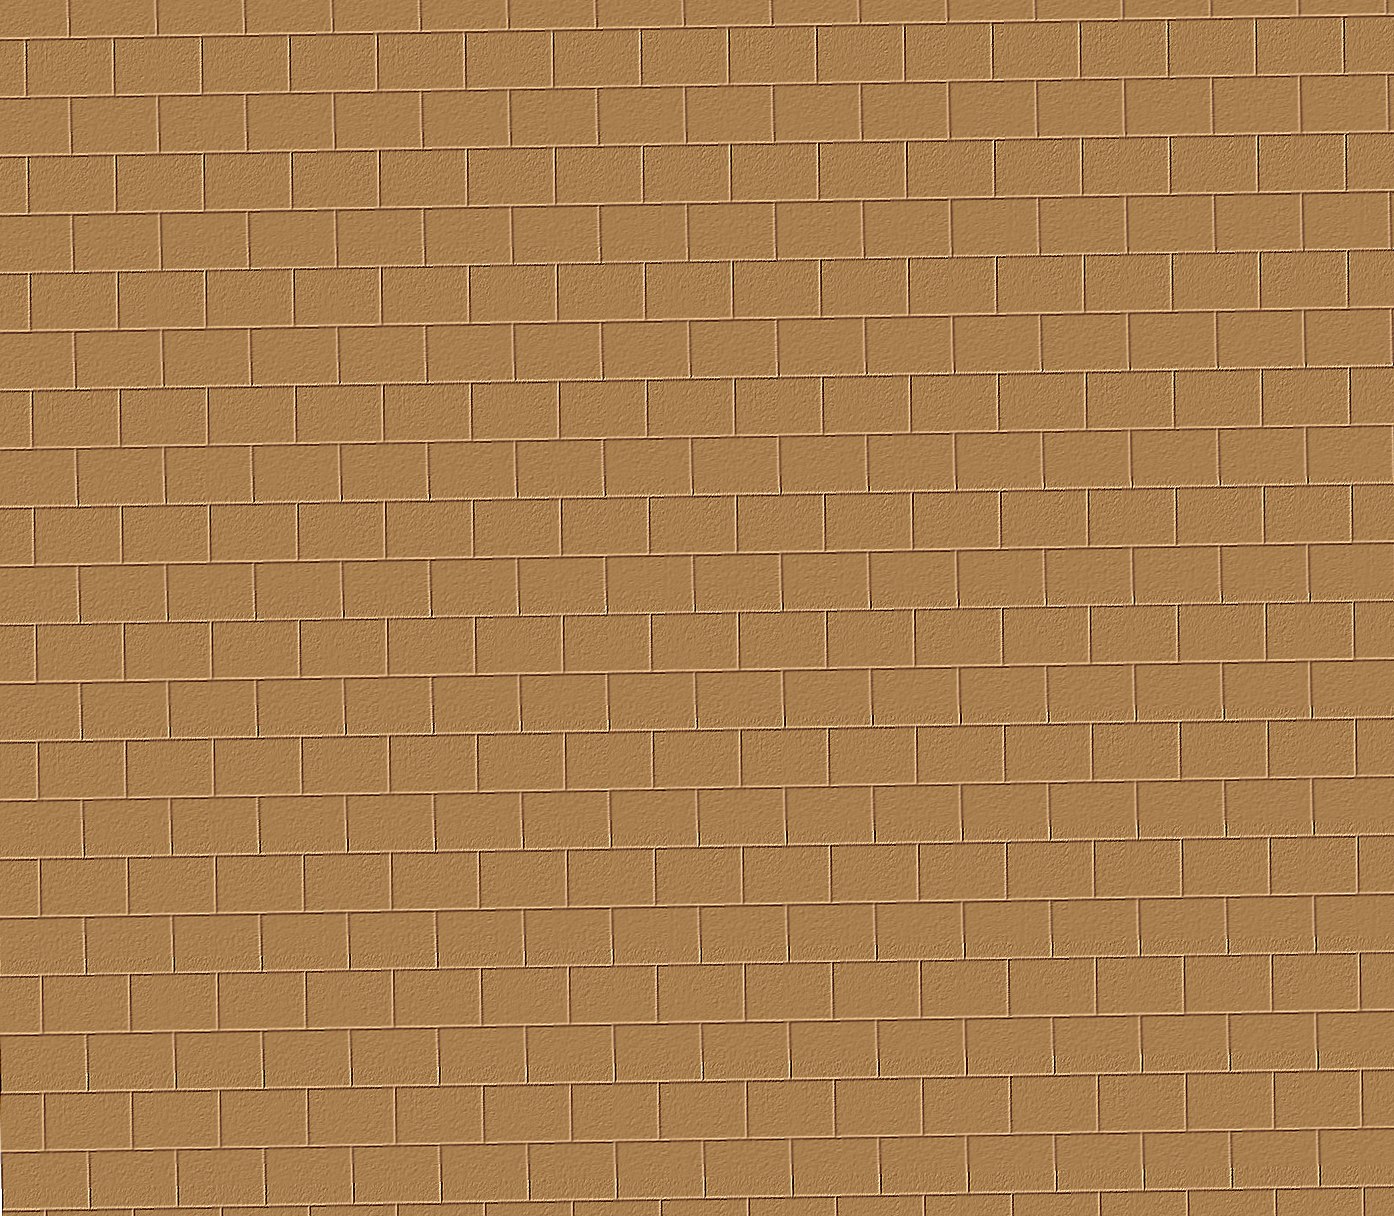 iPhone Bricks 1 at 1024 x 1024 iPad size wallpapers HD quality